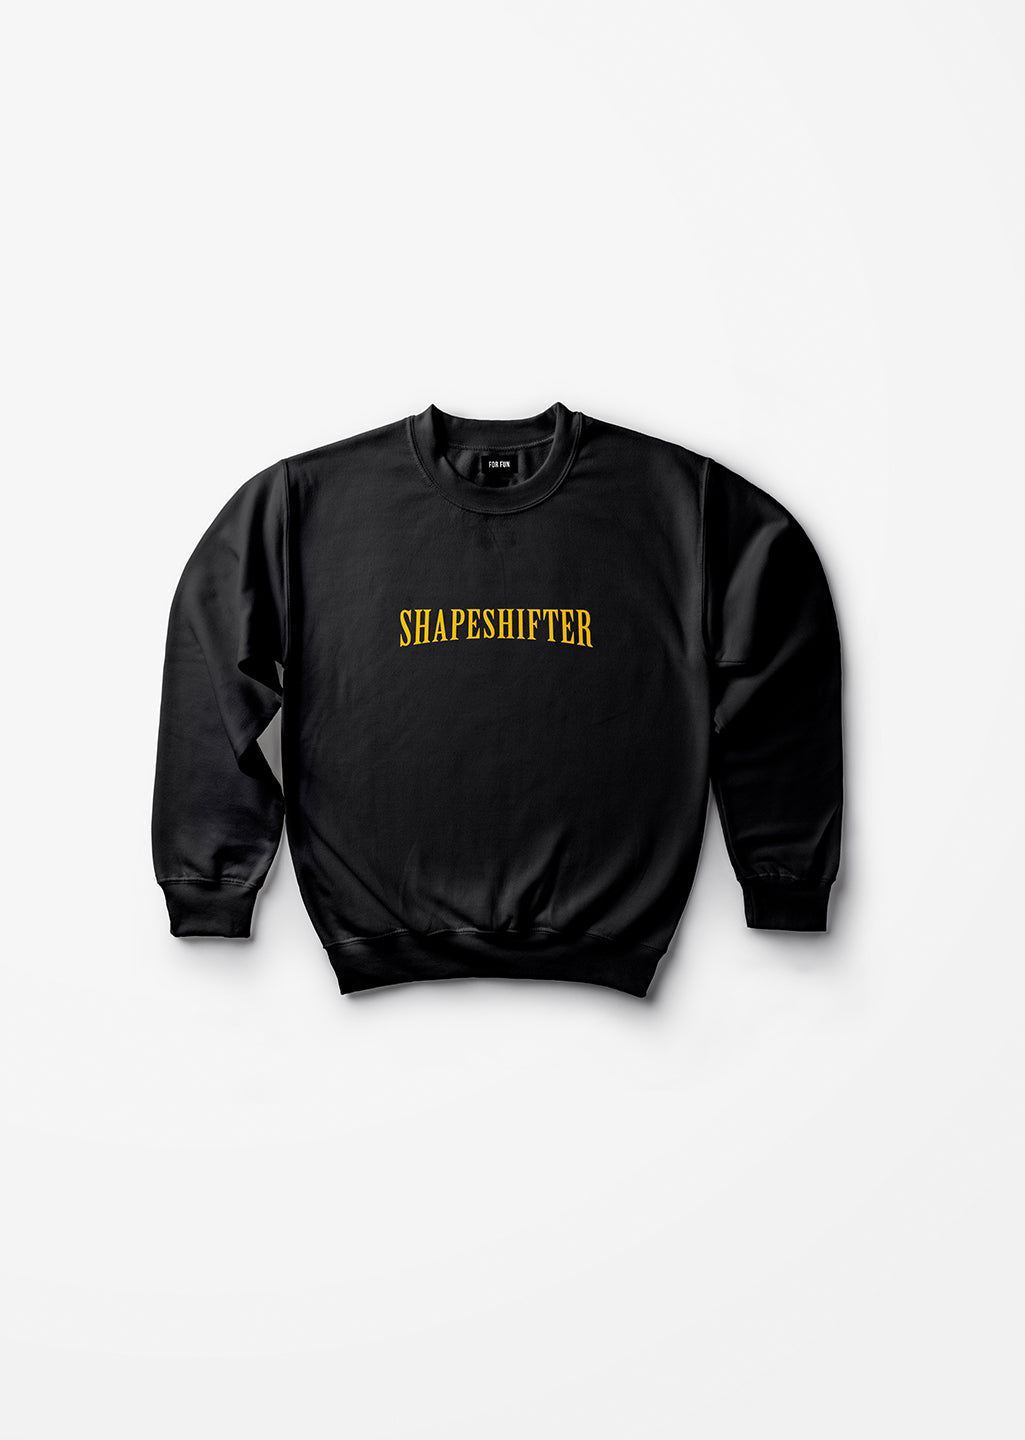 Shapeshifter / Sweatshirt